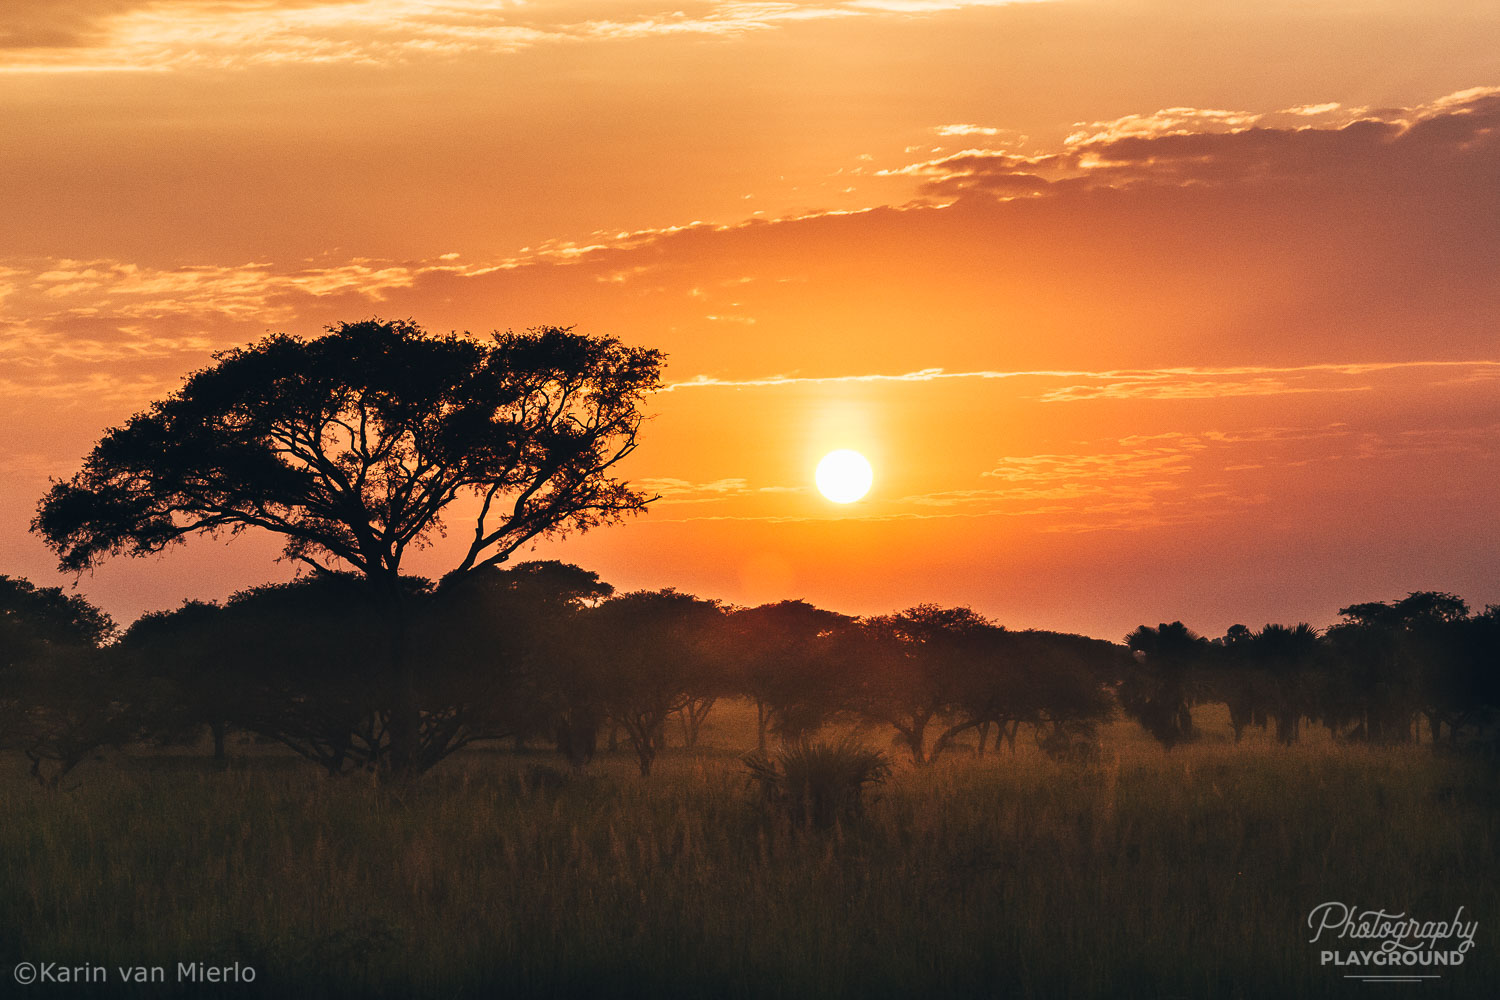 sunset photography, how to photograph the sunset | Photo: Sunrise at Murchison Park, Uganda ©Karin van Mierlo, Photography Playground